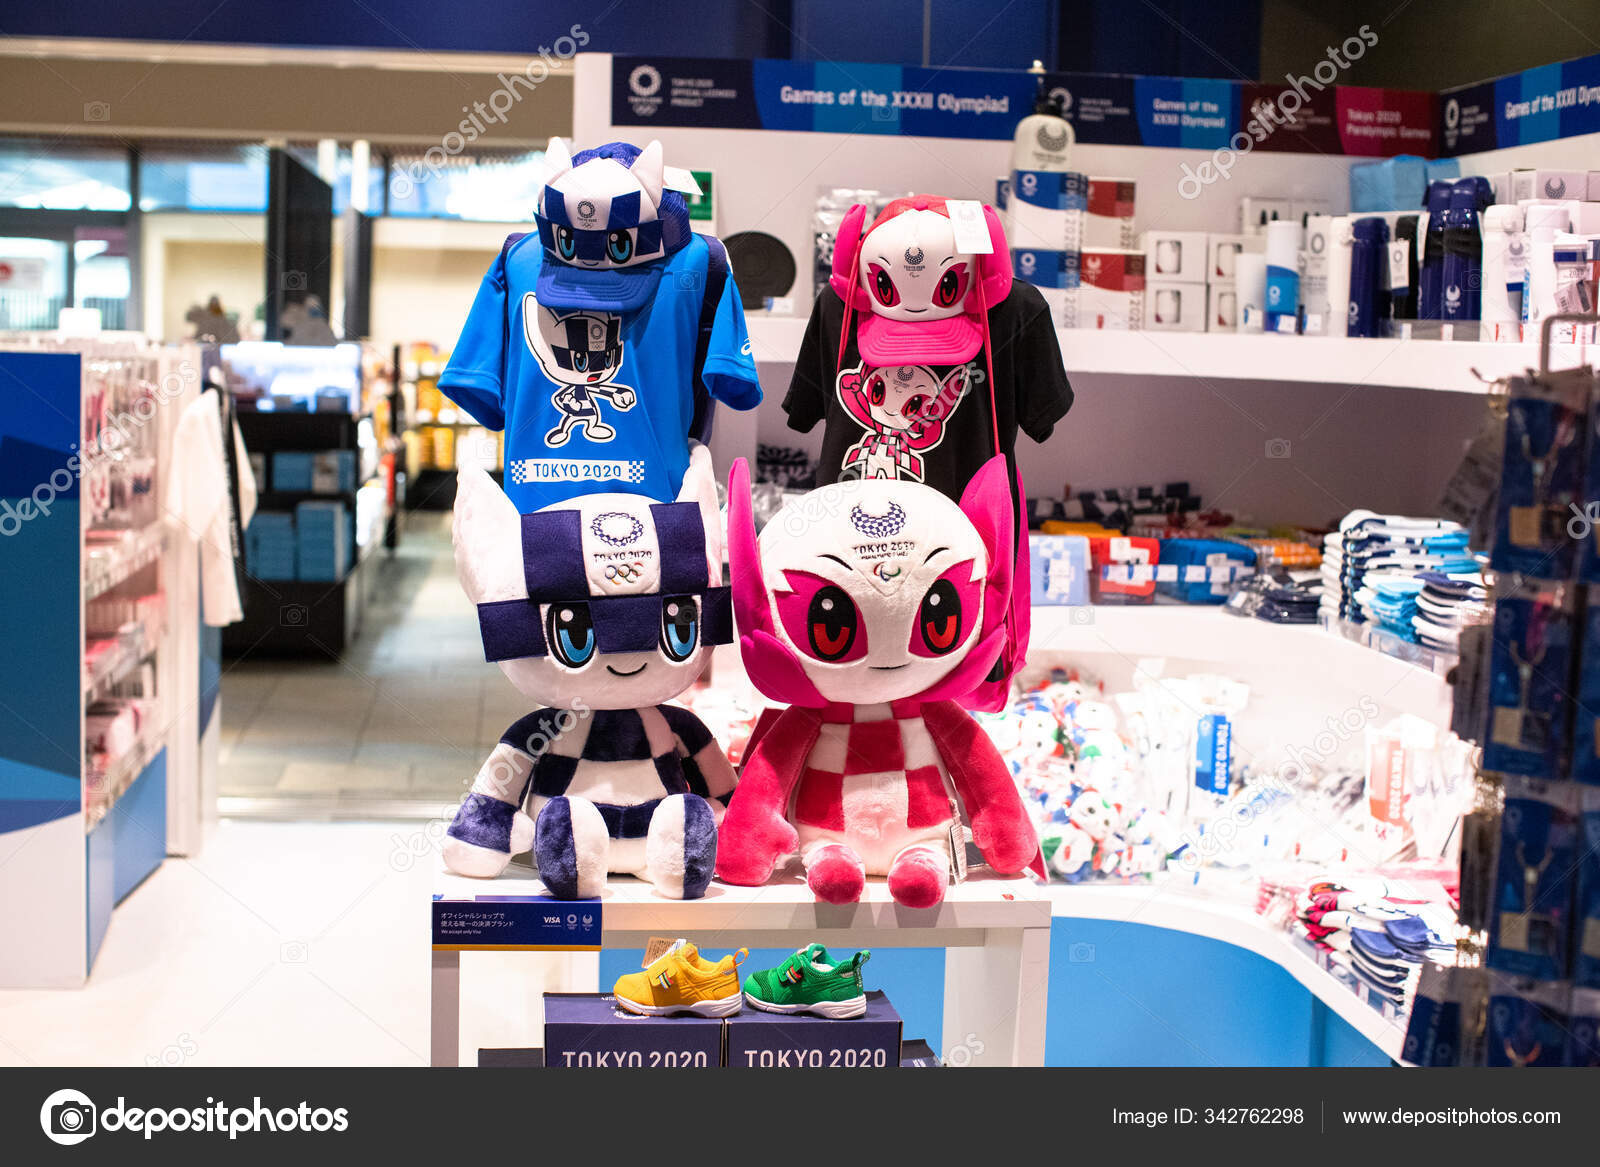 Tokyo 2020 Olympics Mascot Plush Toy (Large)